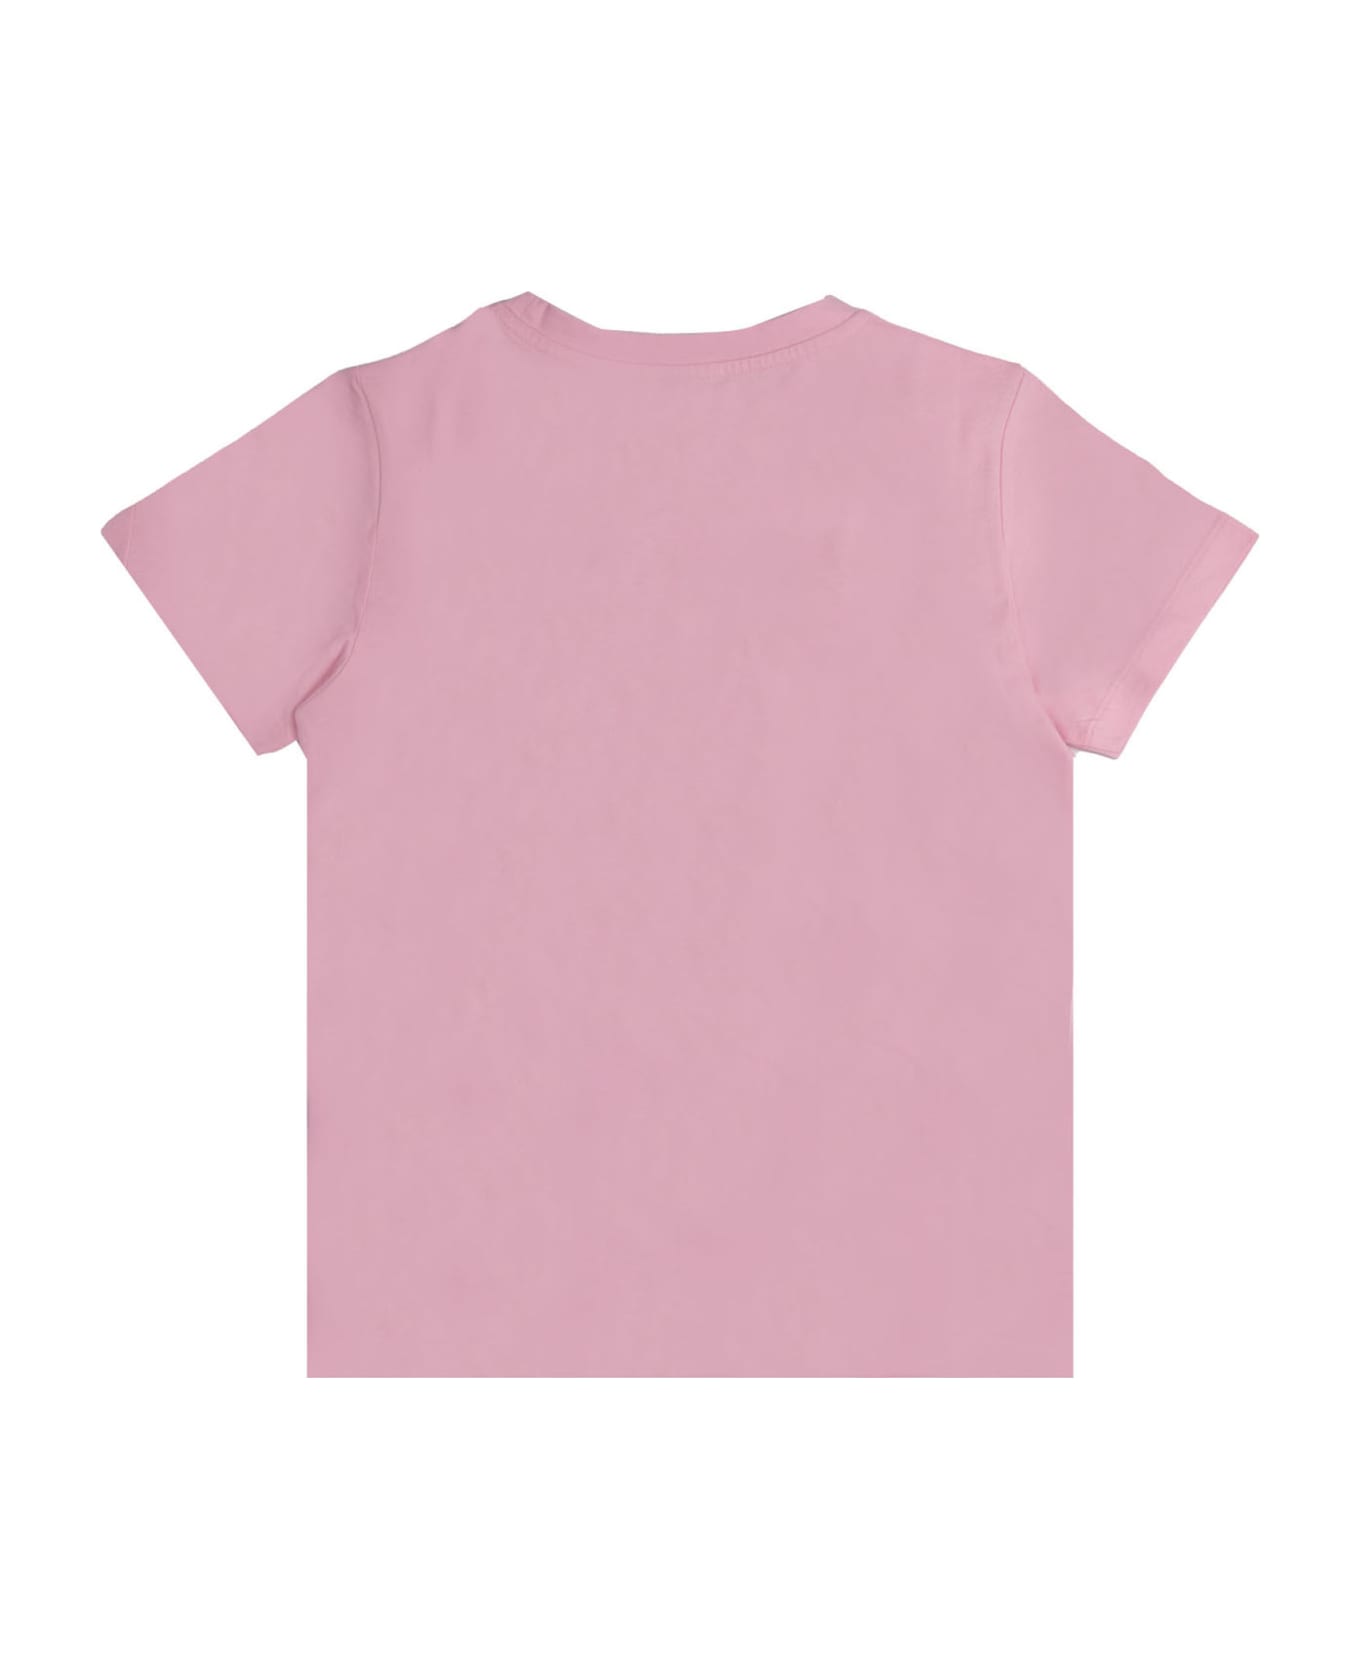 Balmain Cotton T-shirt - Rose Tシャツ＆ポロシャツ